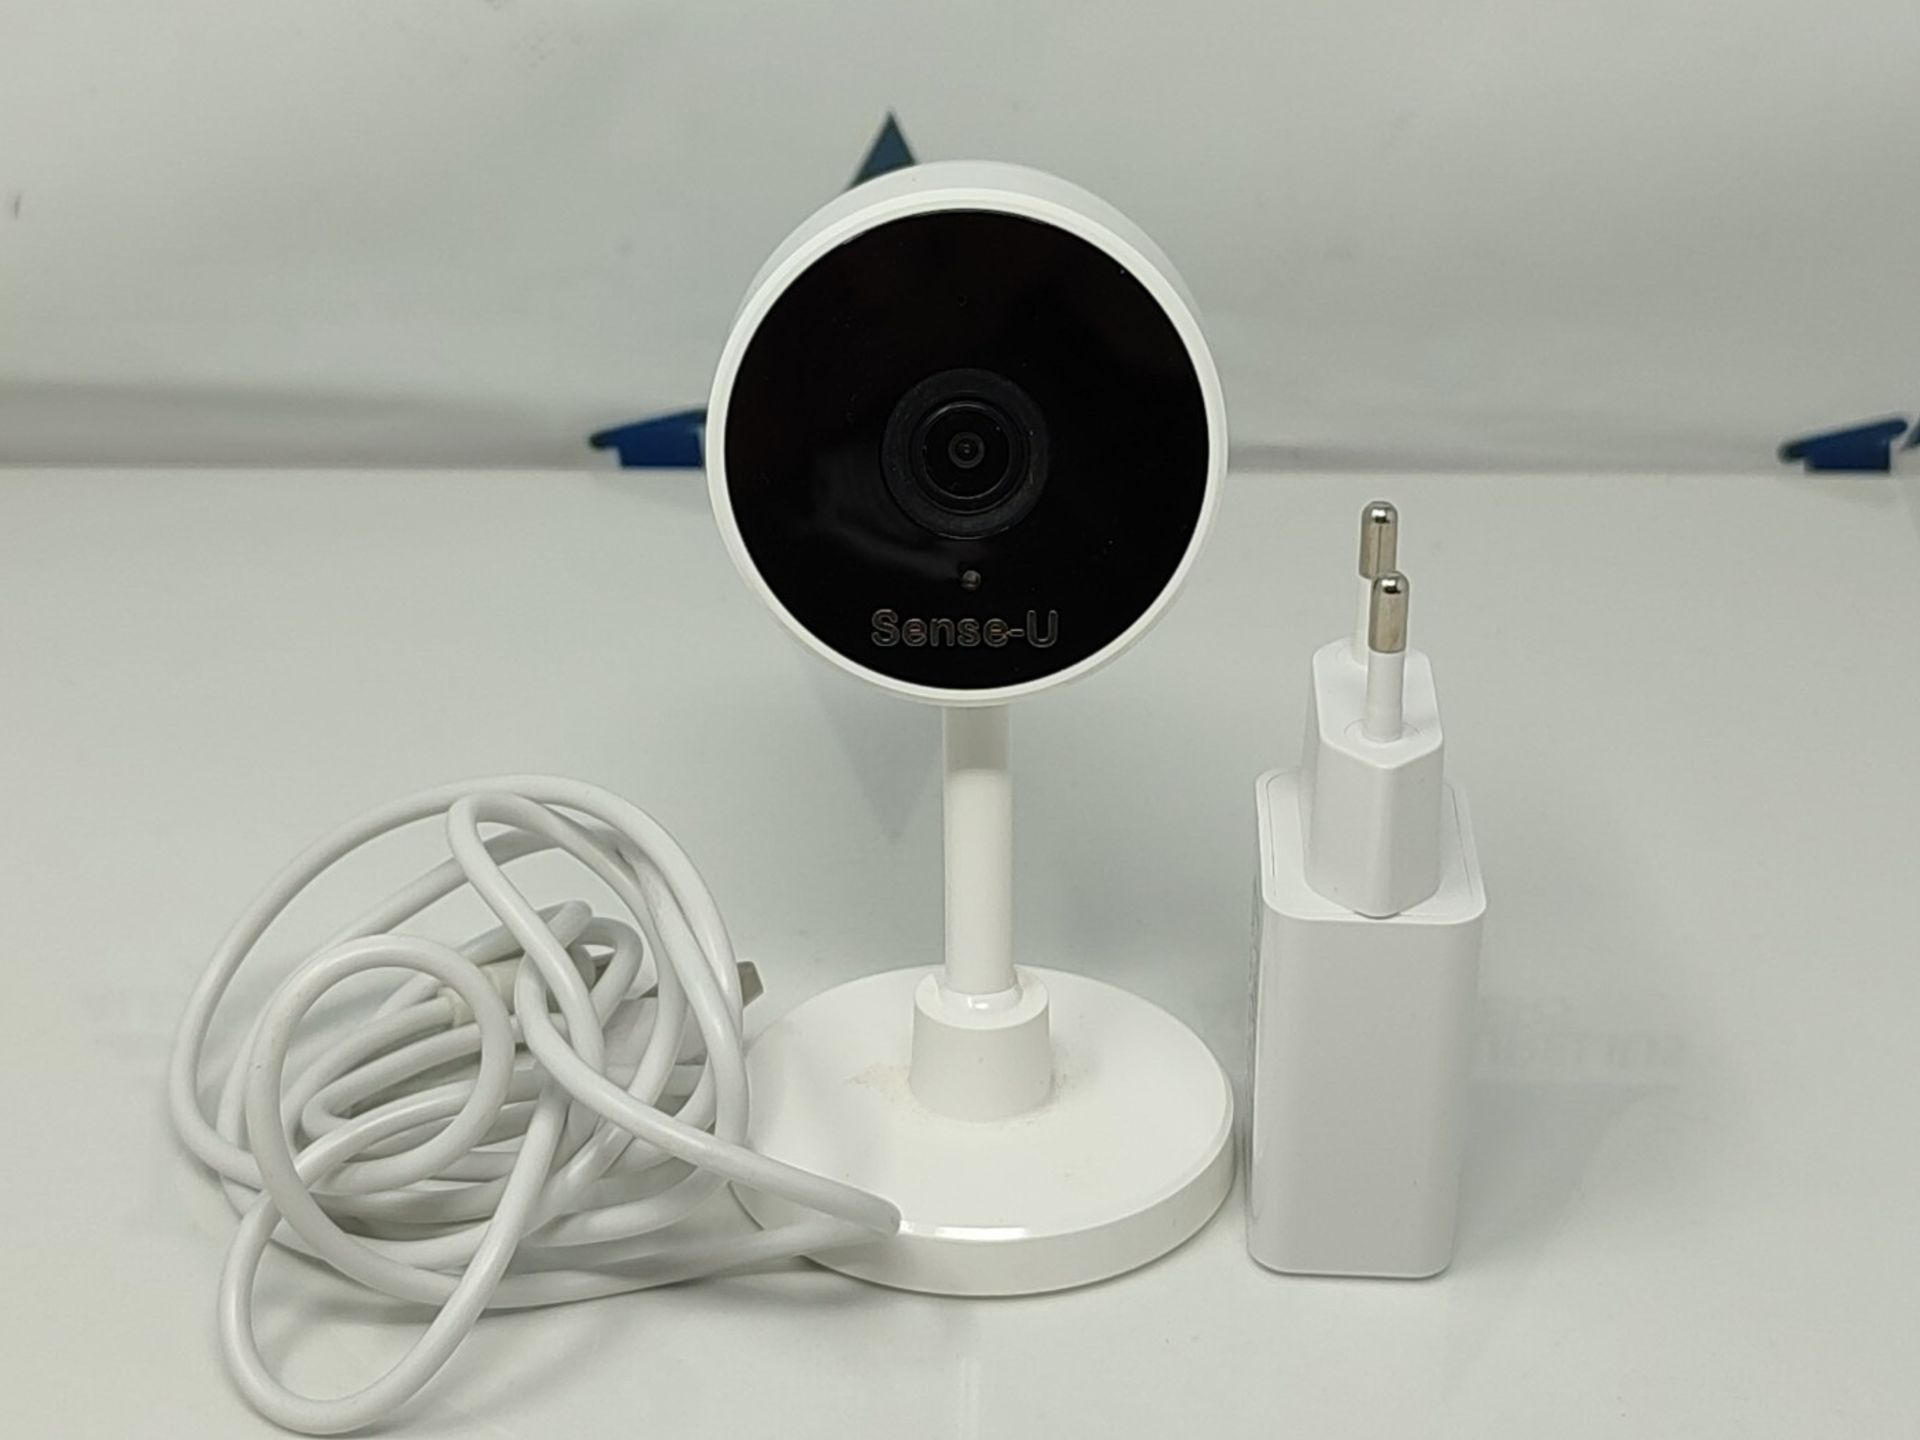 RRP £118.00 Sense-U Video Baby Monitor with Camera 1080P HD Video, 2-Way Talk, Night Vision, Motio - Image 3 of 3